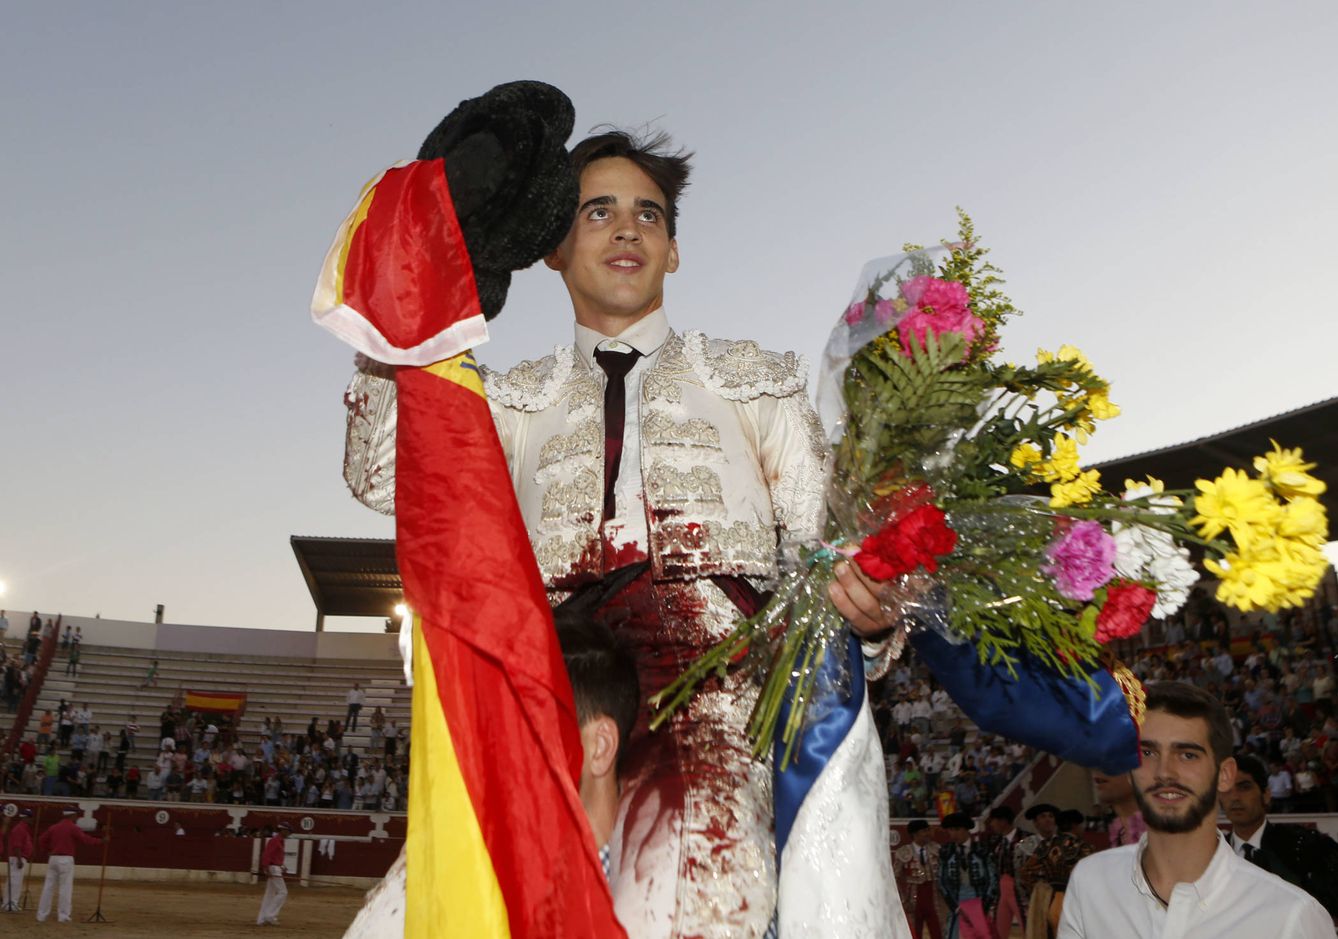 Gonzalo Caballero triunfal en la corrida benéfica. (Gtres)